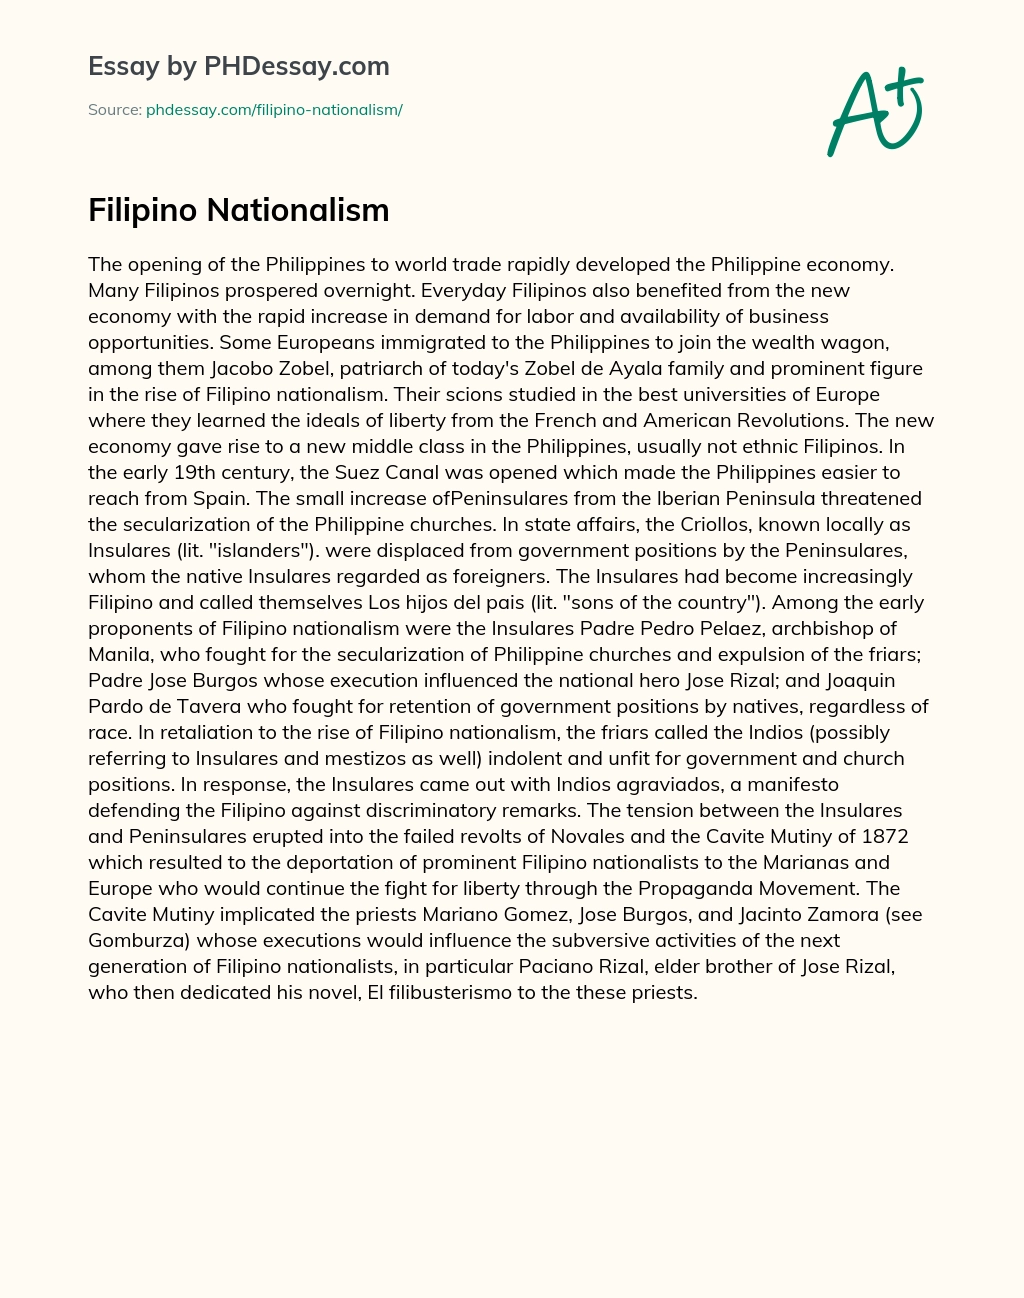 Filipino Nationalism essay